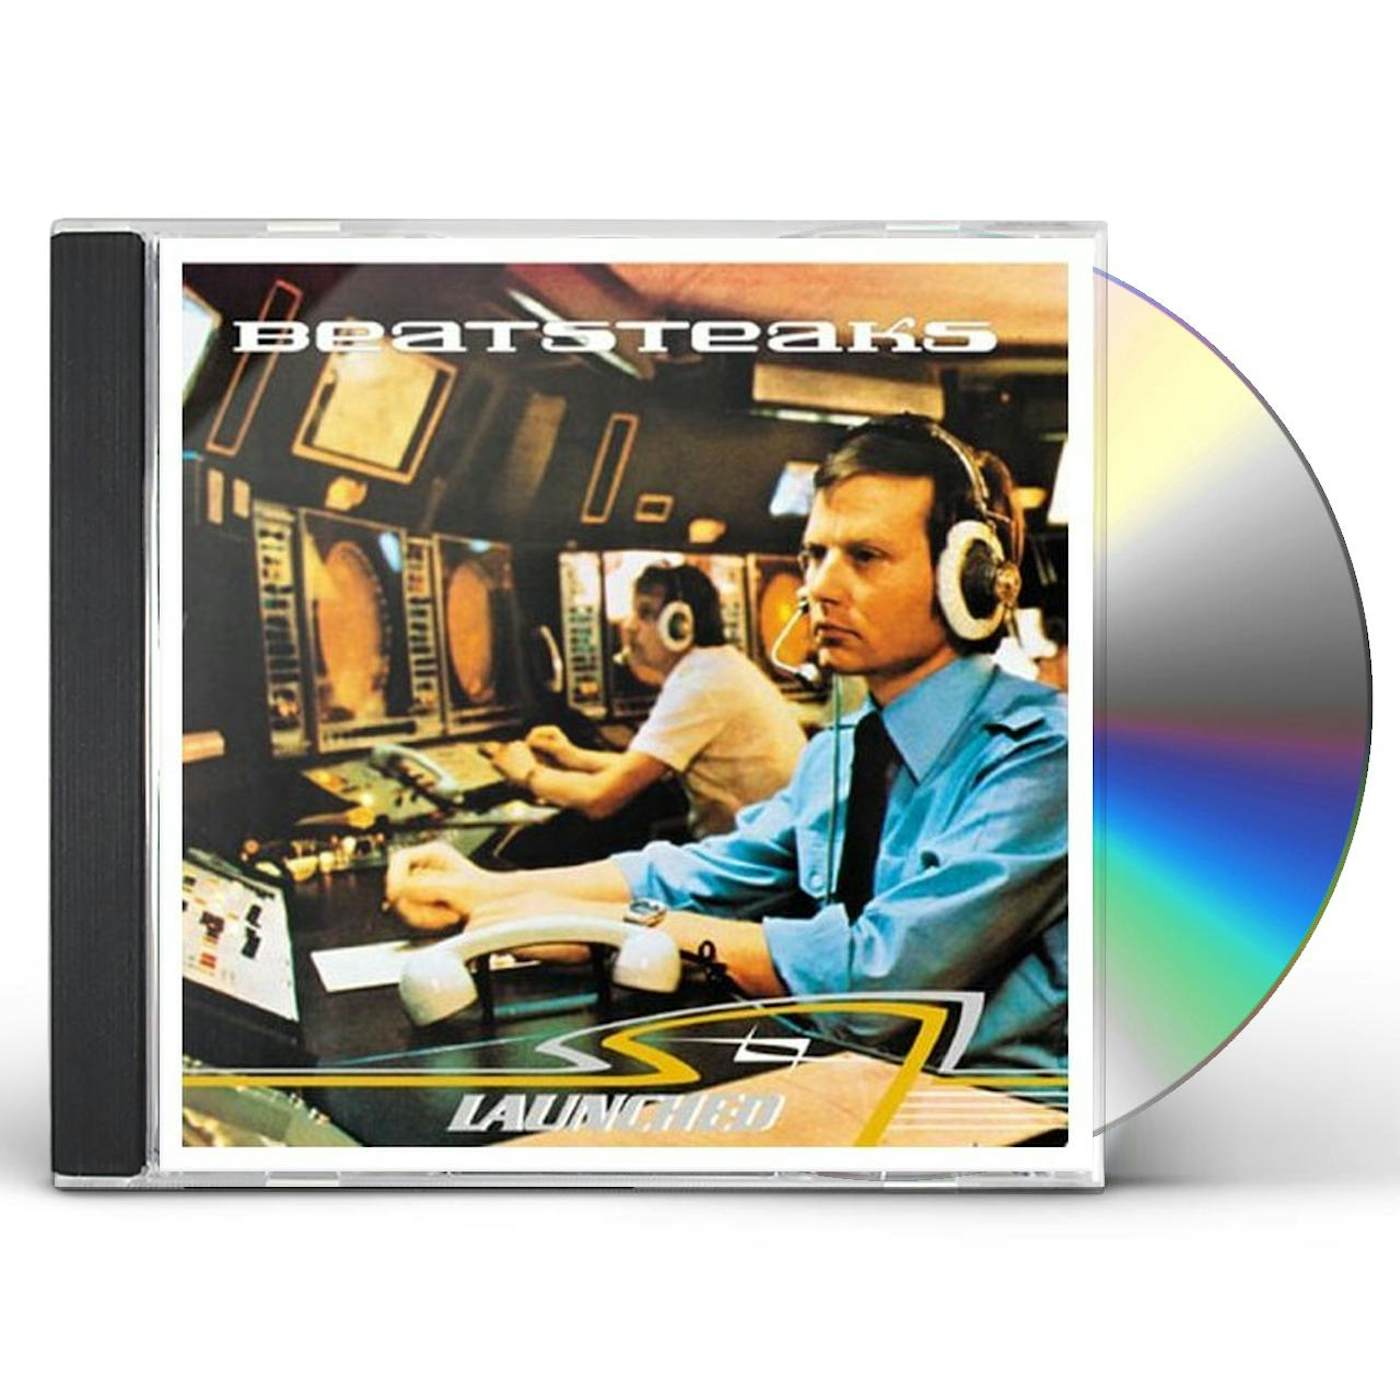 Beatsteaks LAUNCHED (MOD) CD